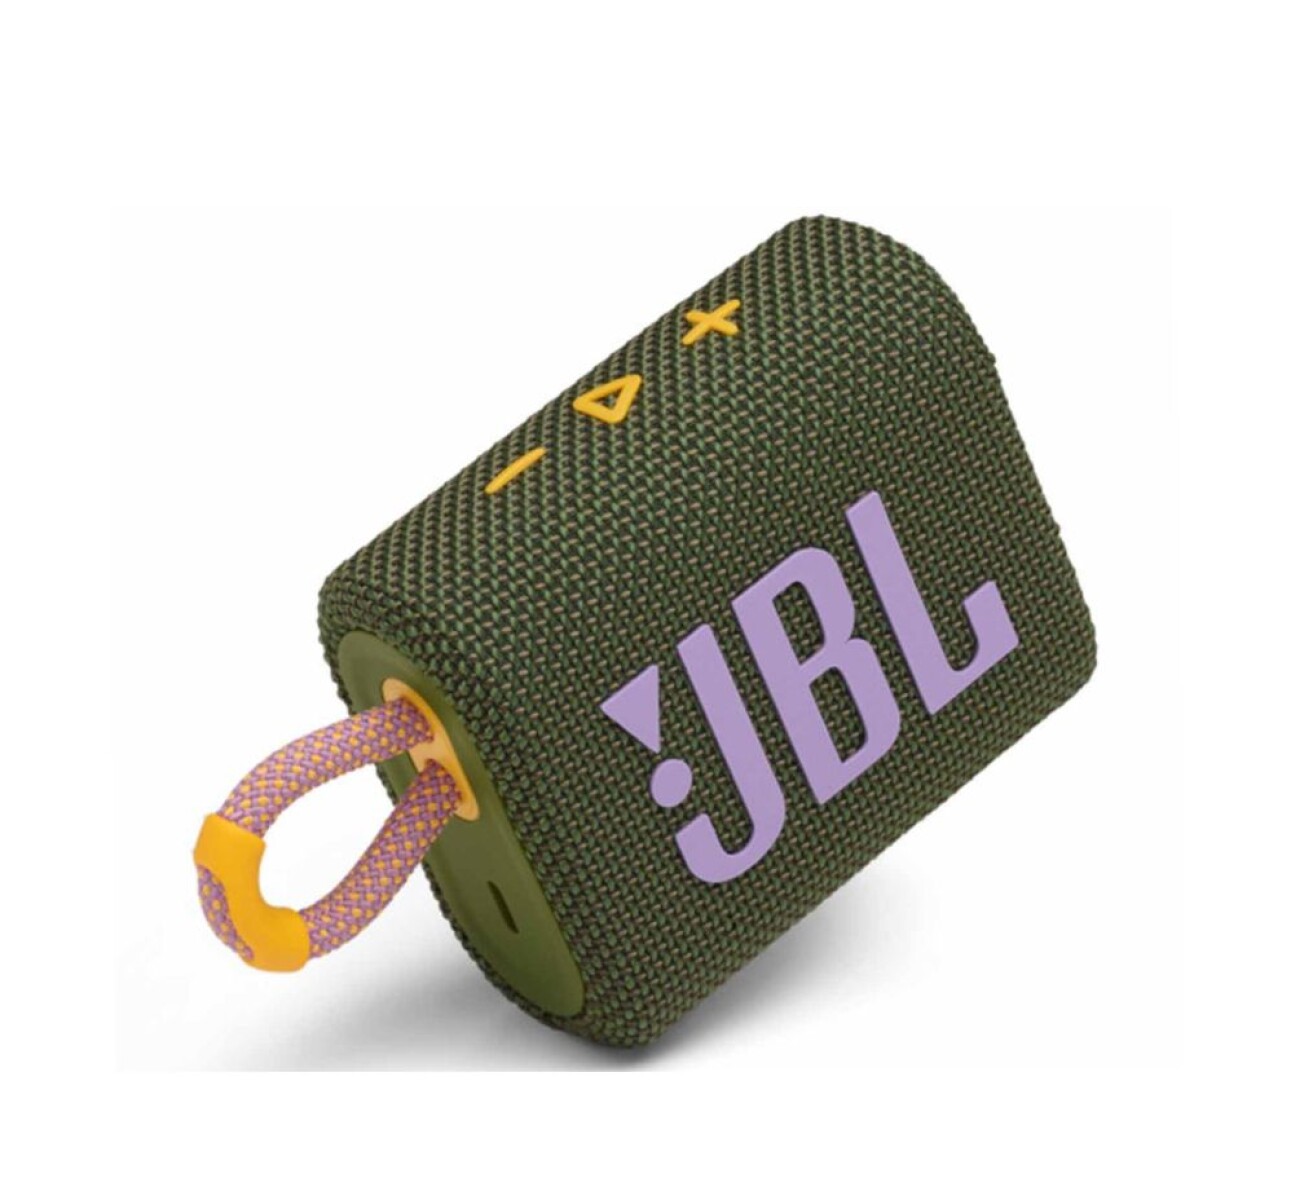 Jbl go 3 parlante portatil waterproof - Green 